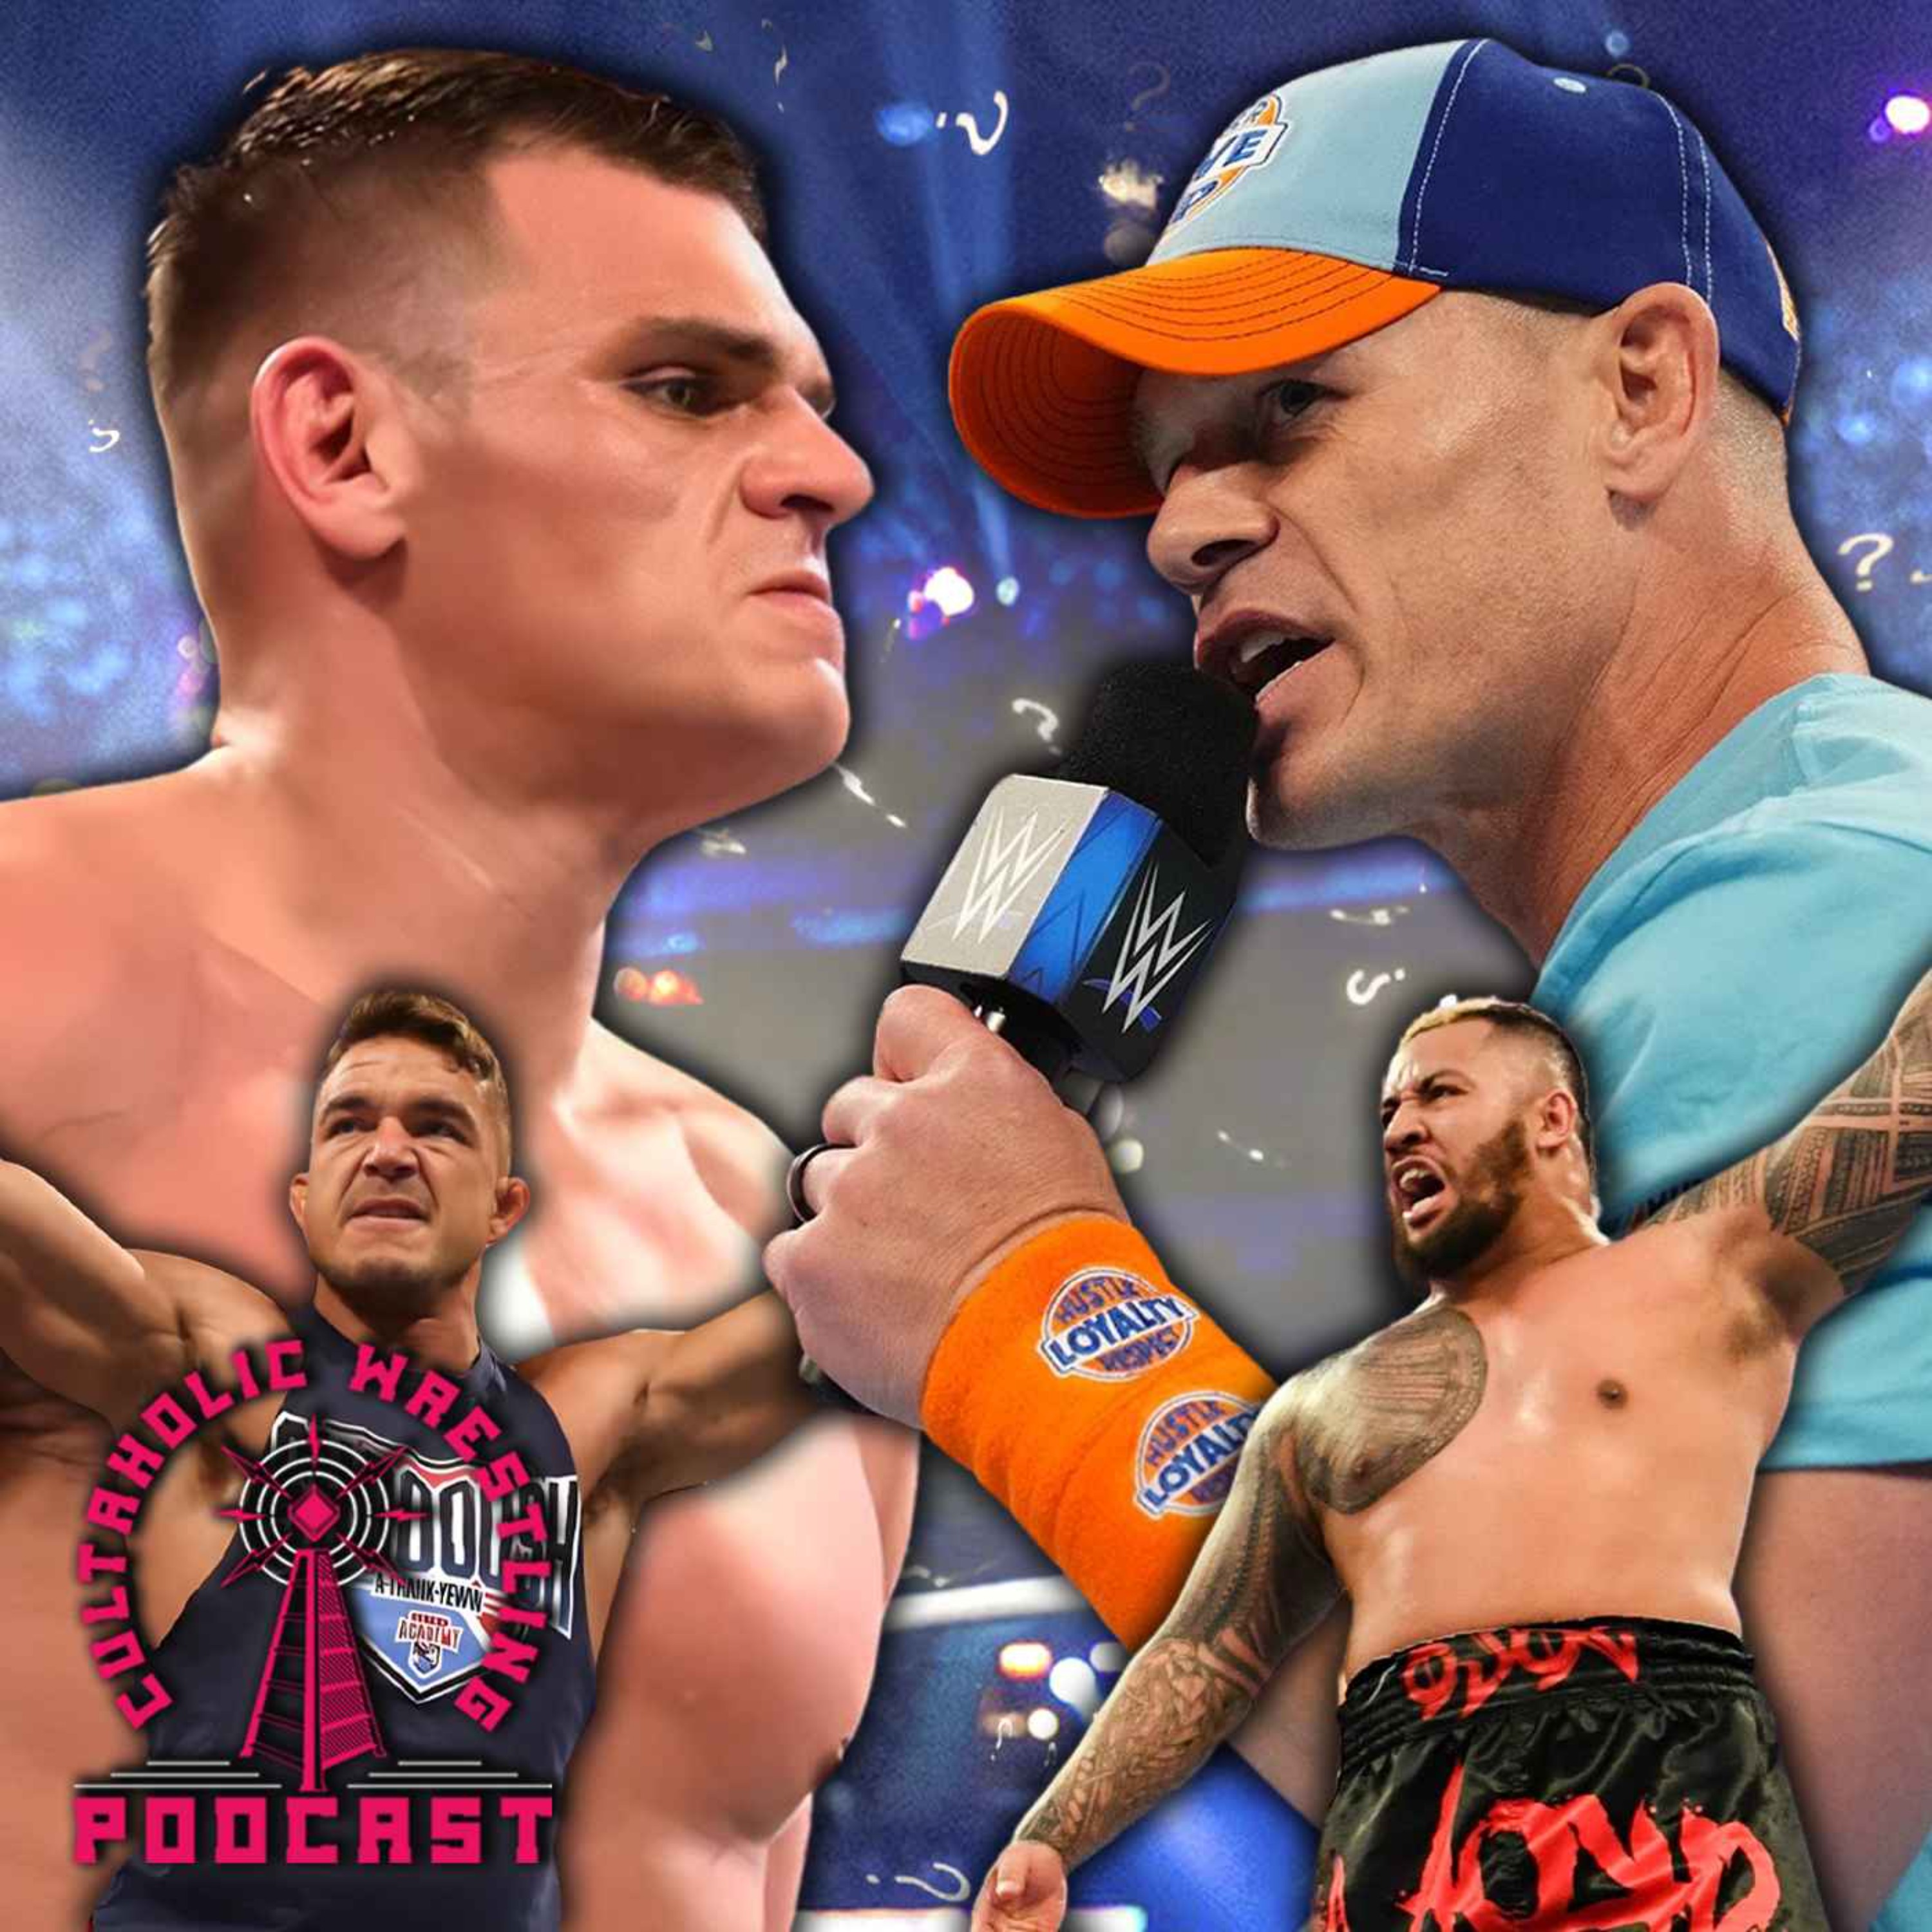 Cultaholic Wrestling Podcast 304 - How Should John Cena's WWE Career Really End?